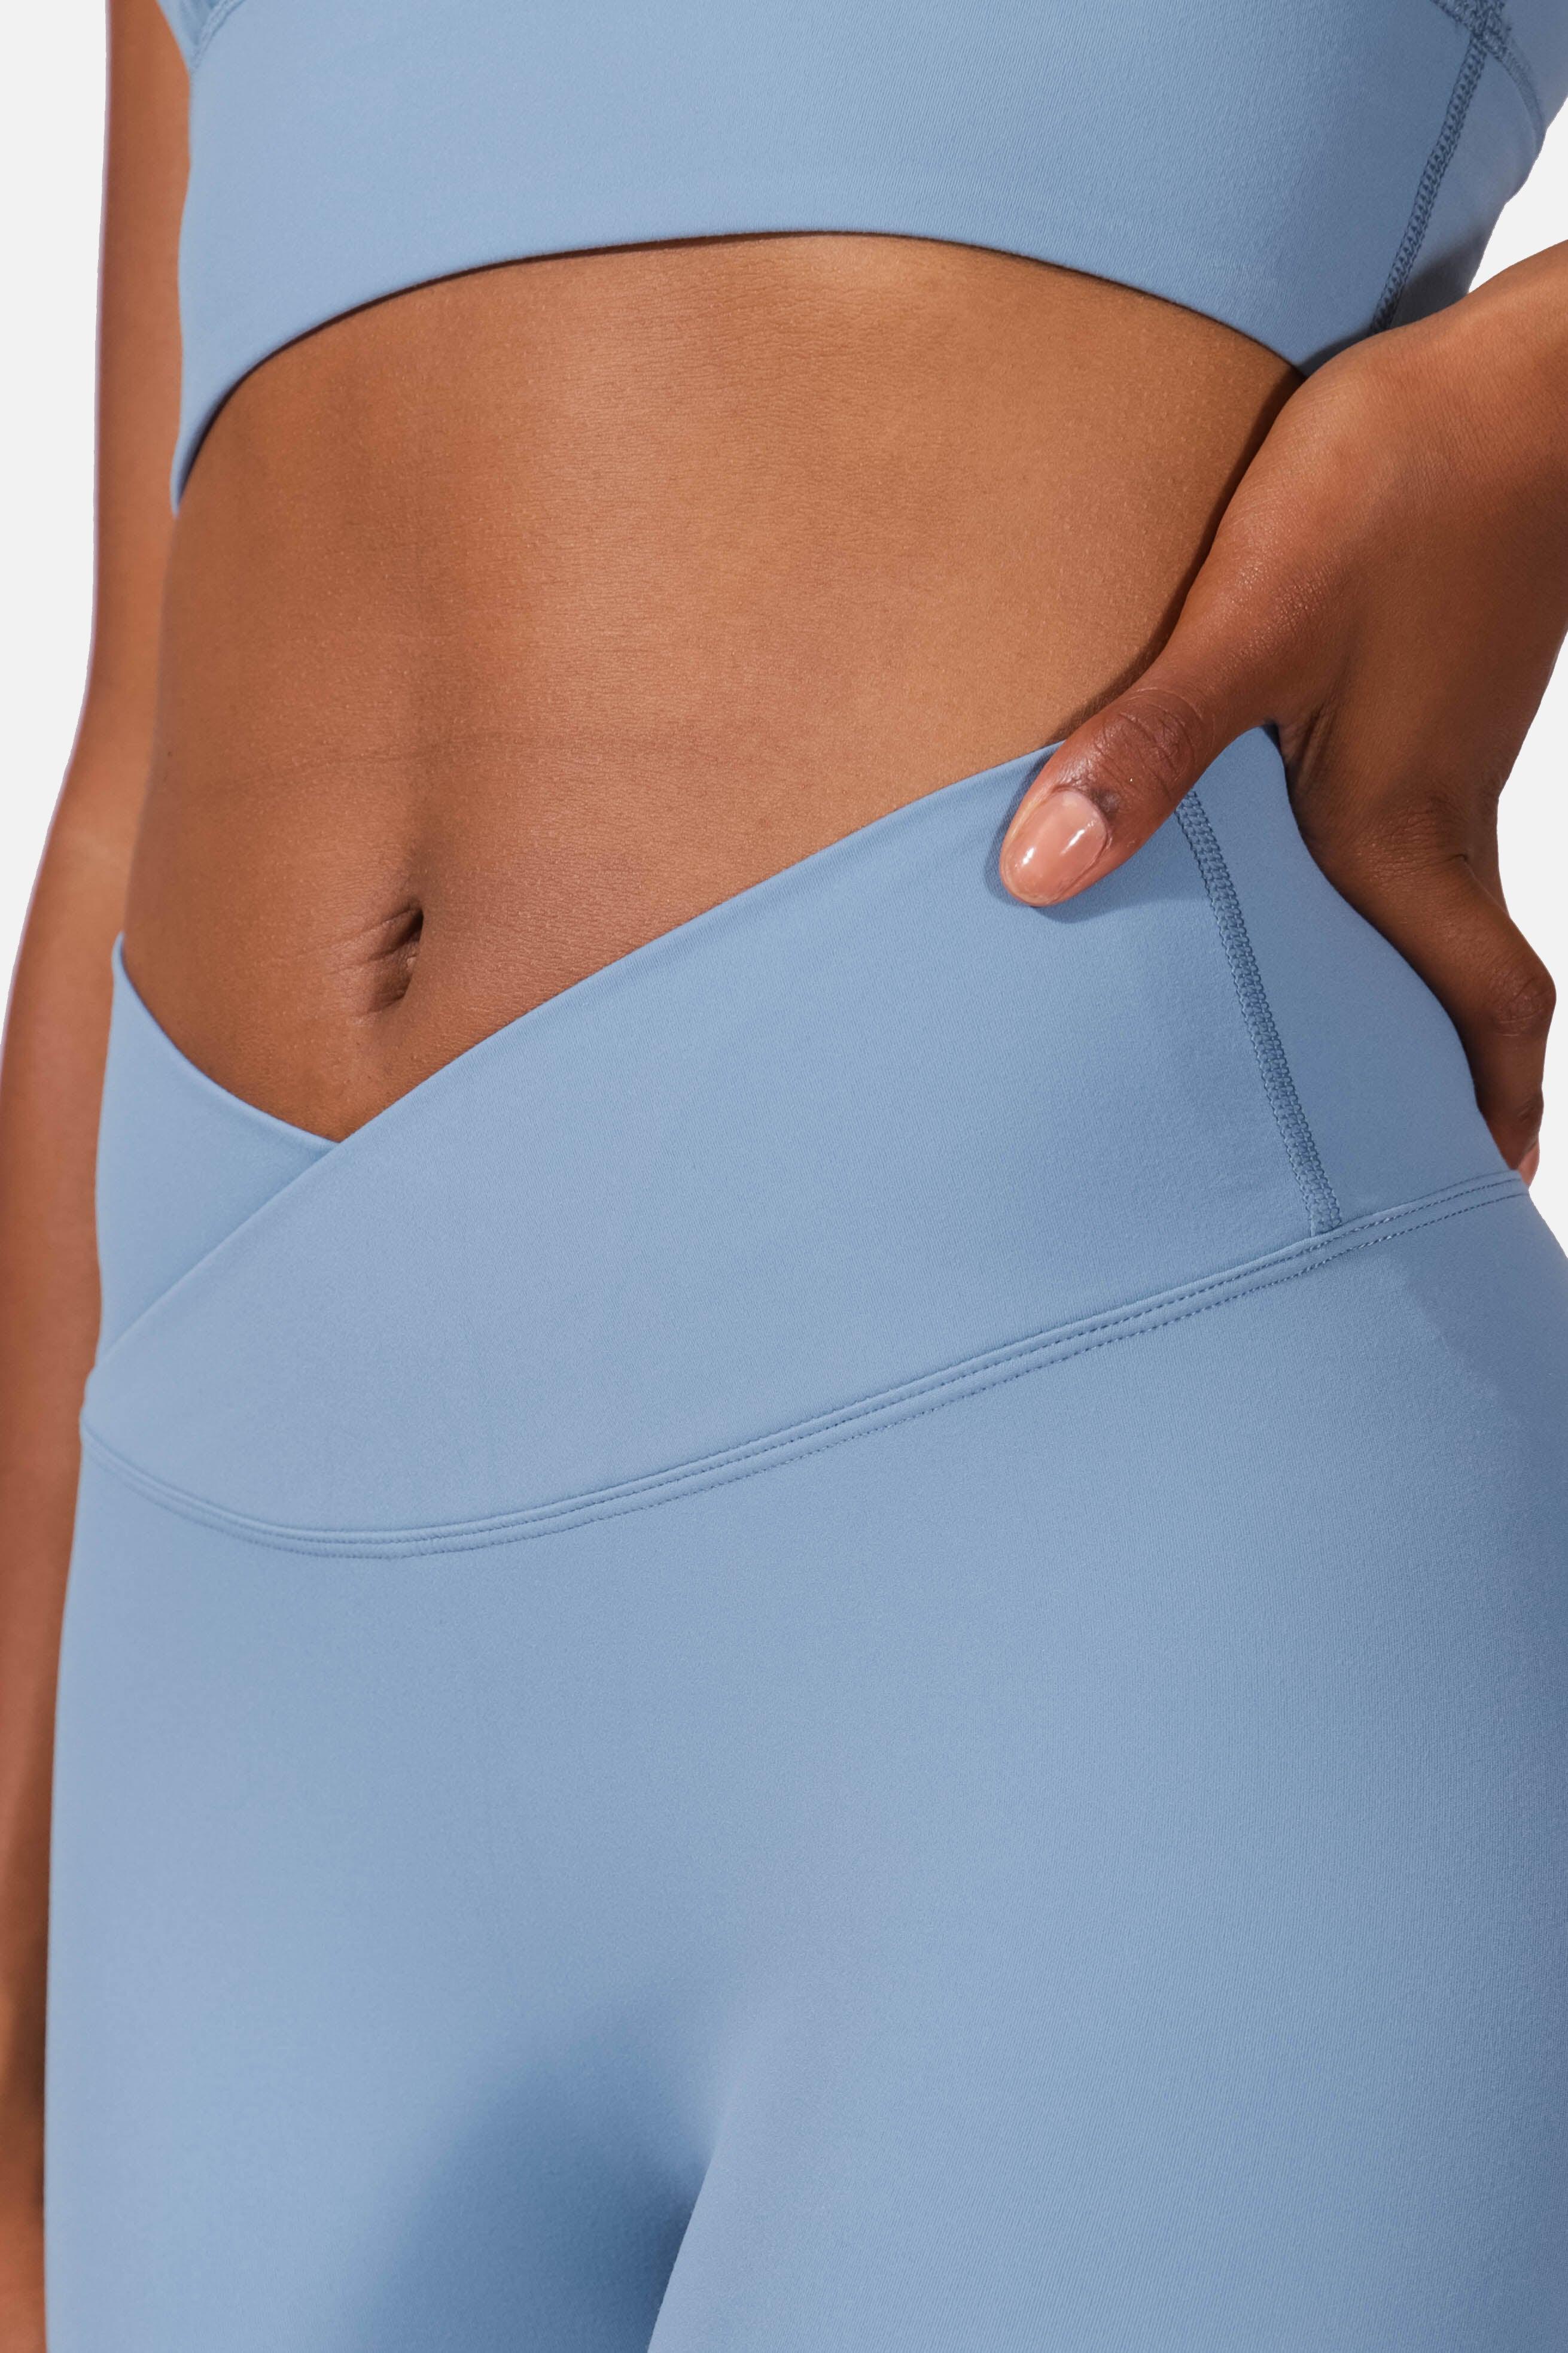 Women's Capri Leggings Side Pockets Tummy Control Butt Lift High Waist Yoga  Fitness Gym Workout Bottoms Black Red Burgundy Spandex Sports Activewear H